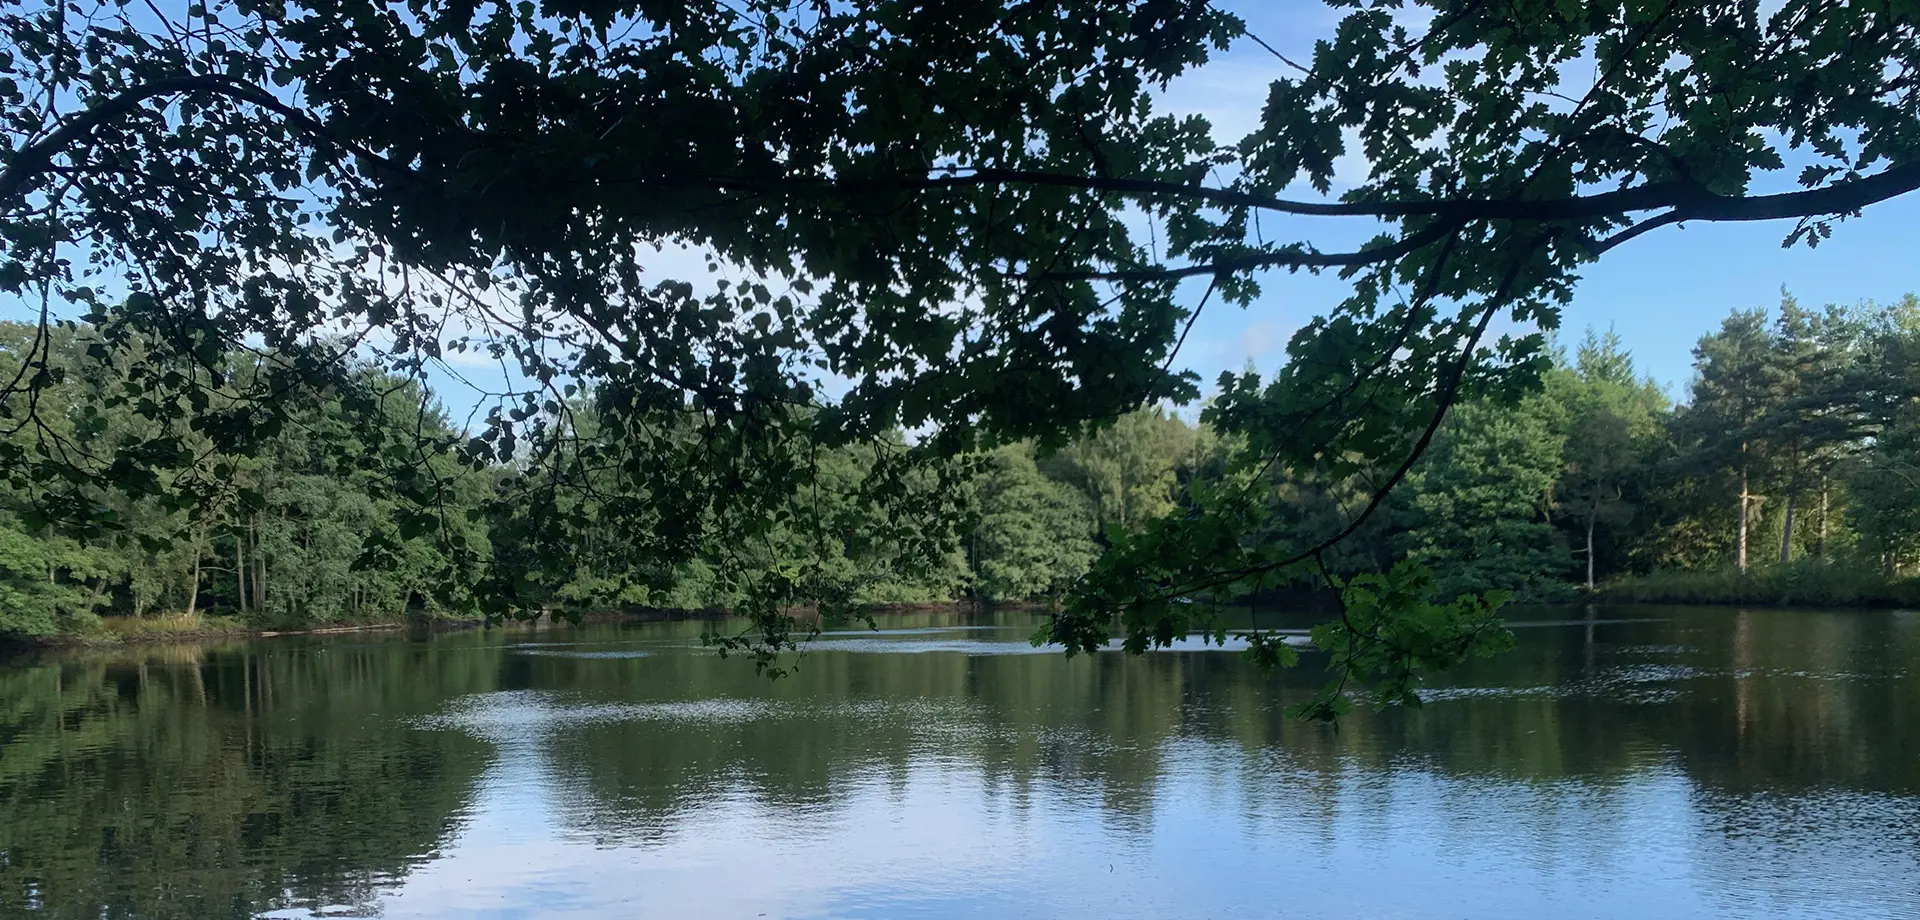 Mindful Waterways Walk - Lakes and Woods